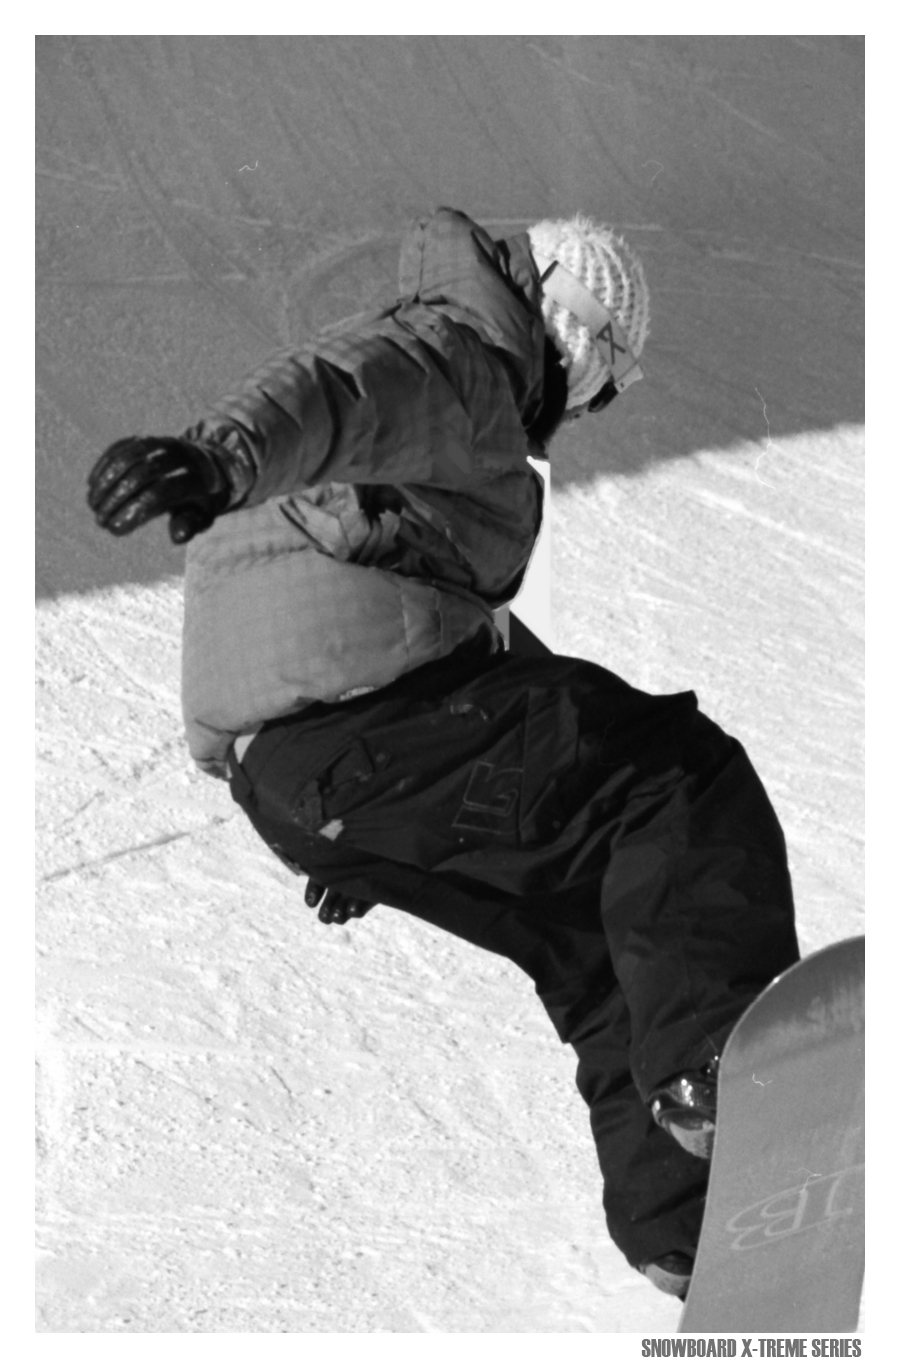 Snowboard X-treme Series: 014